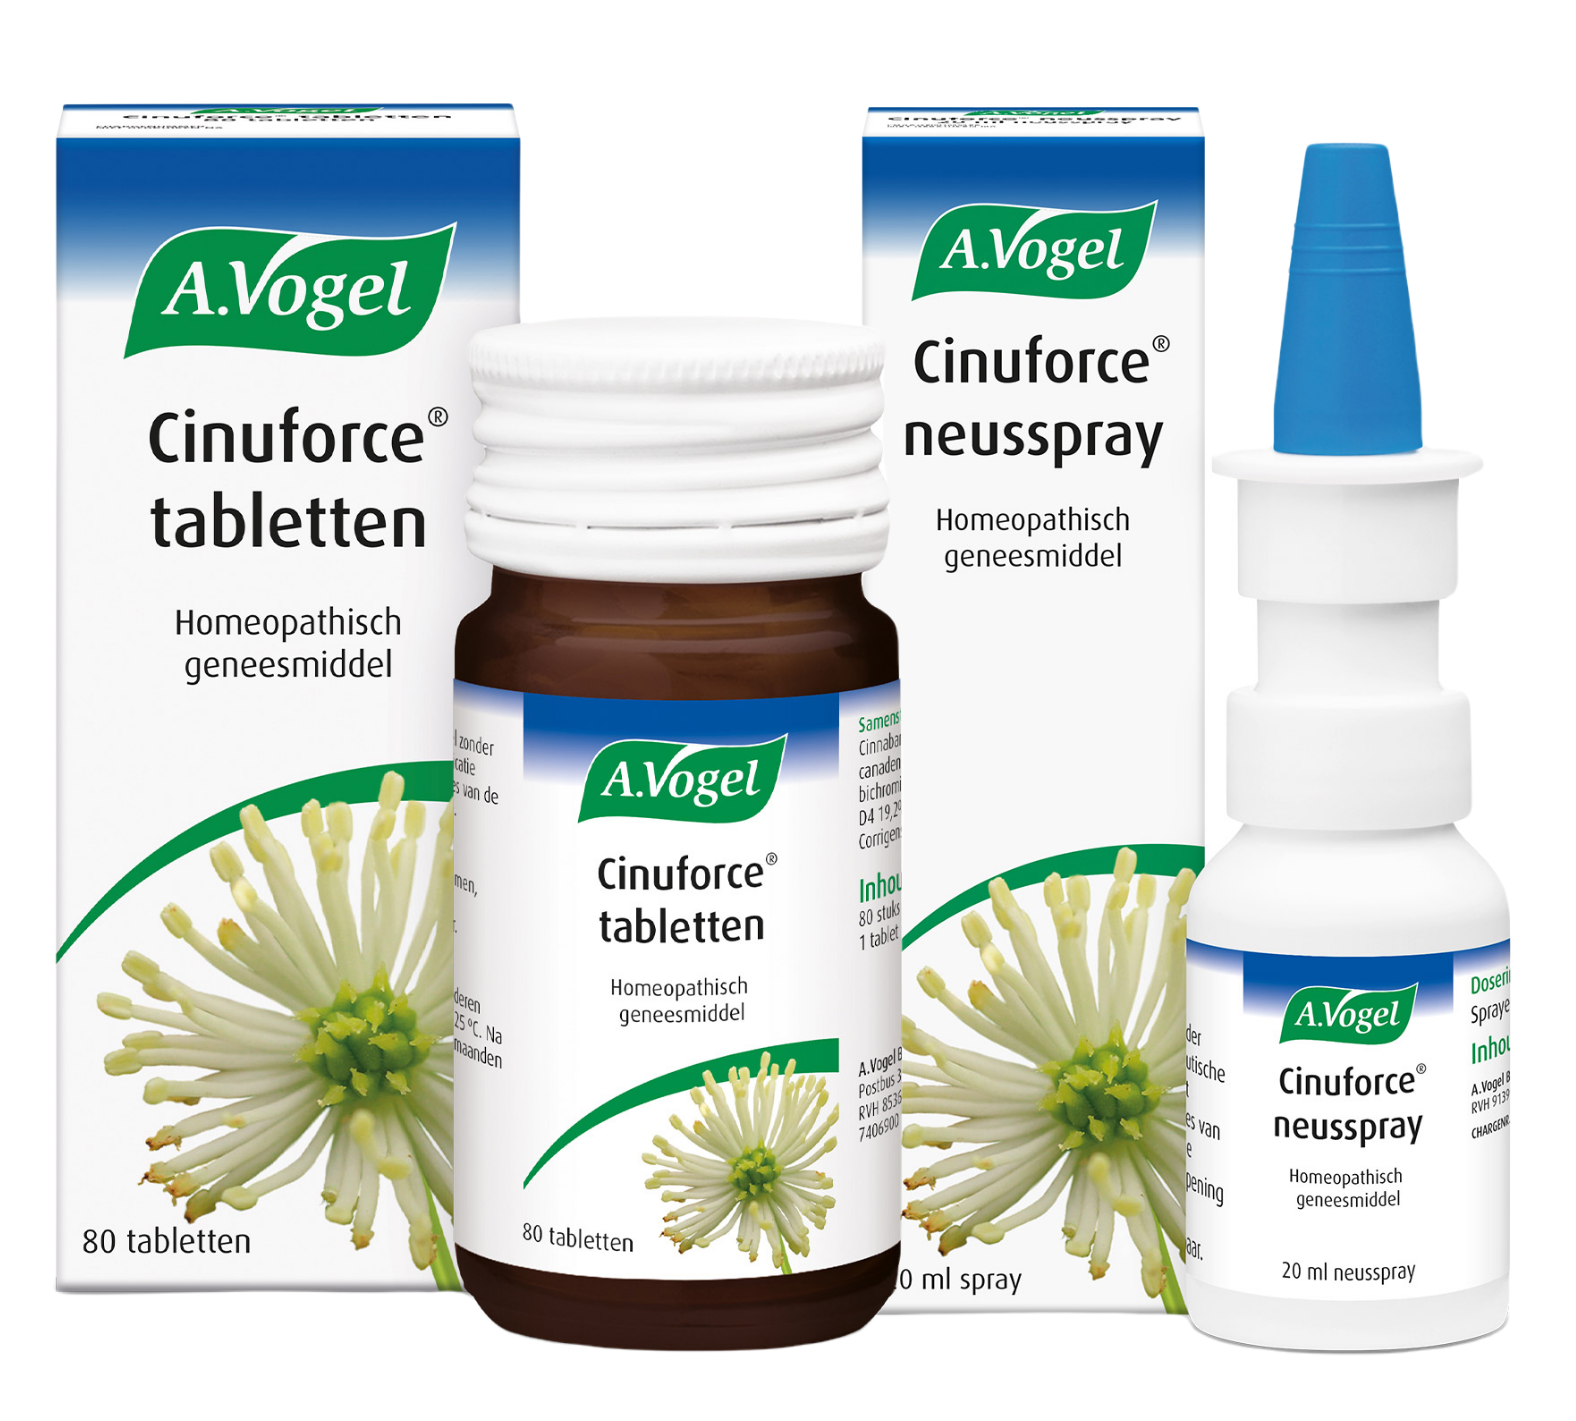 A.Vogel Cinuforce Tabletten 80TB + Neusspray 20ML Combiverpakking